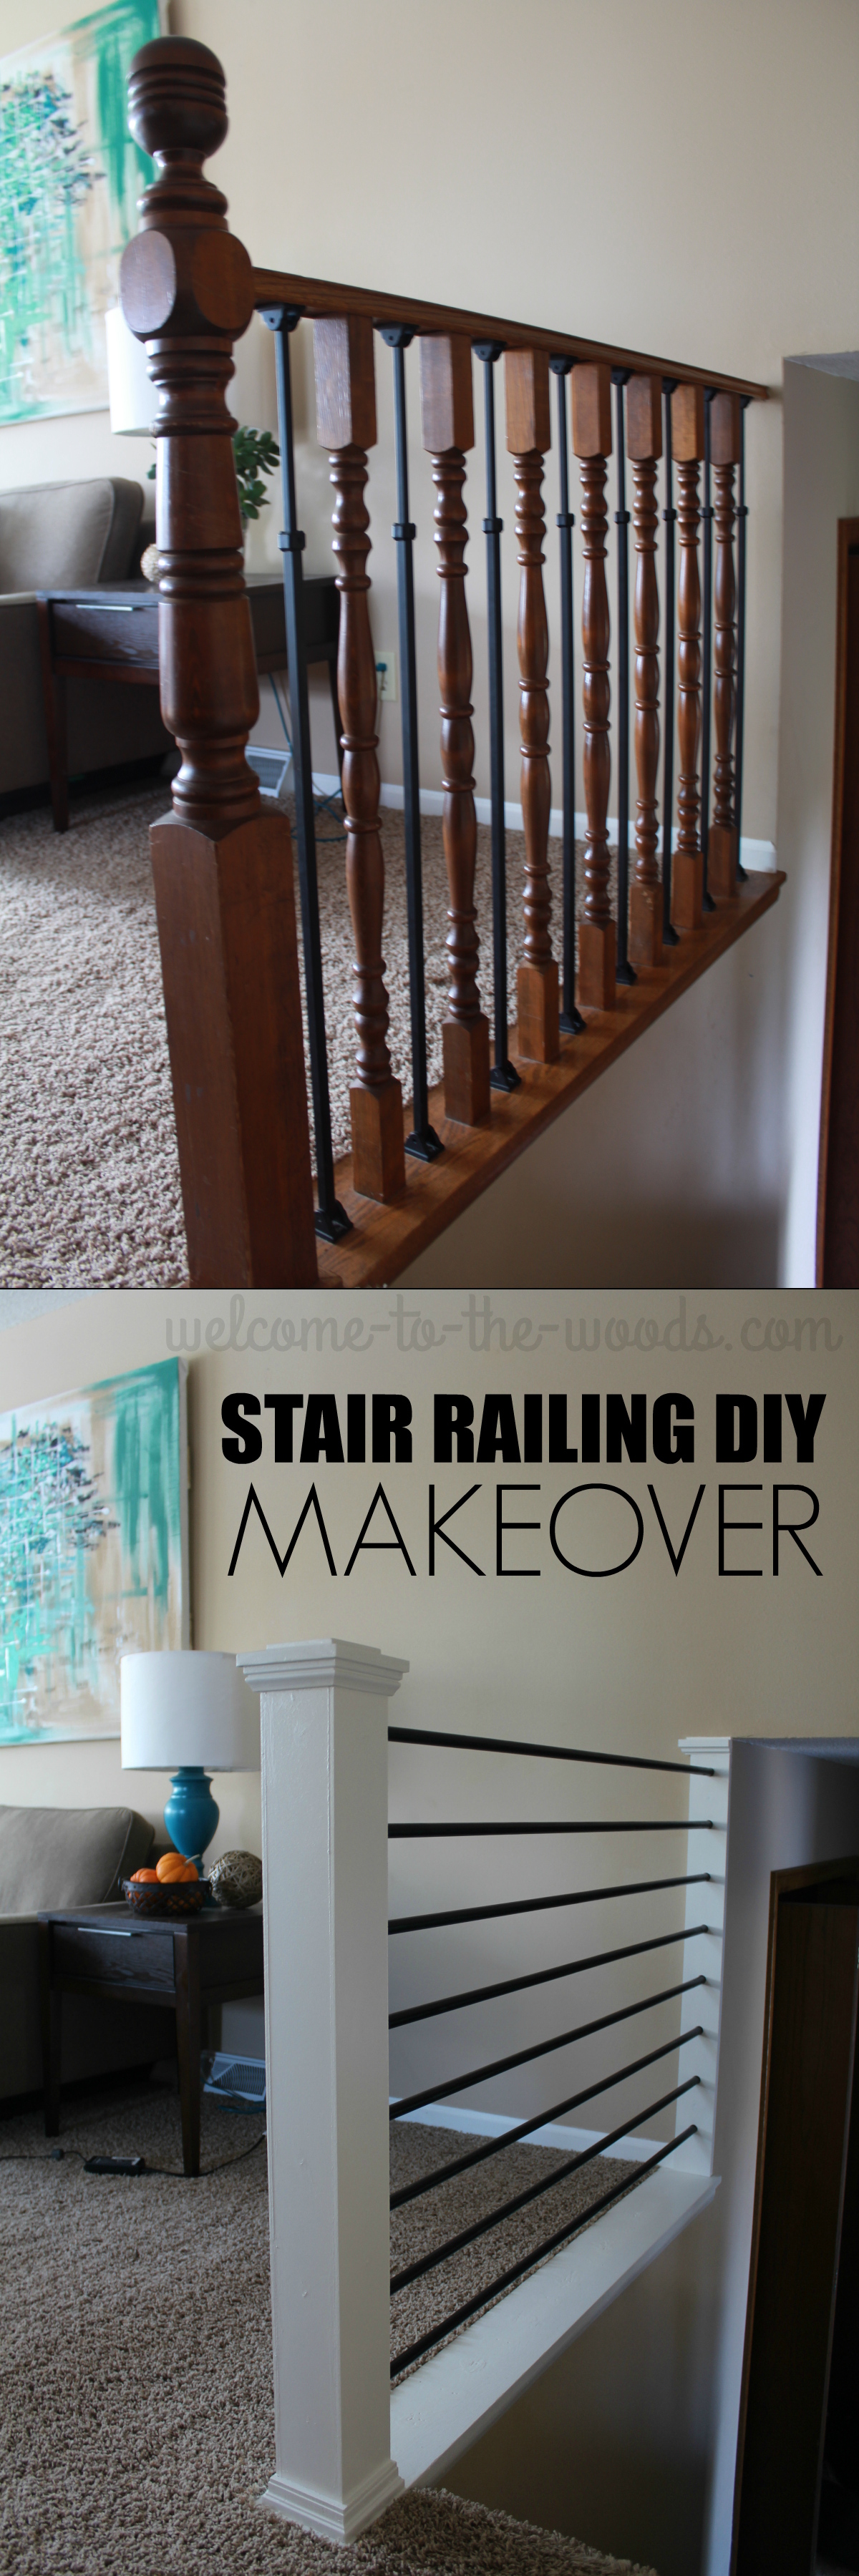 stair-railing-diy-makeover